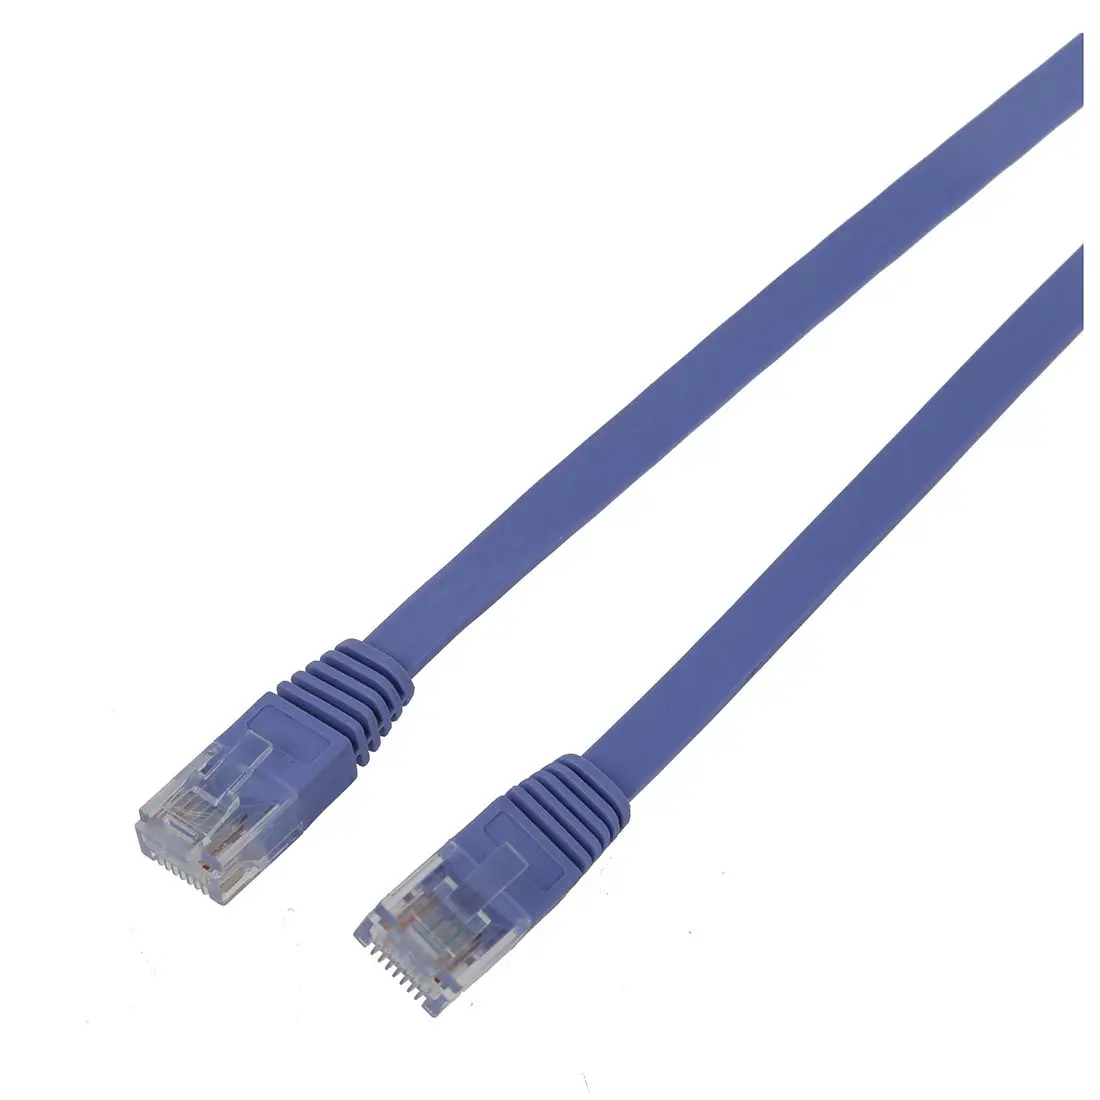 65.6FT 20M CAT6 CAT 6 Flat UTP Ethernet Network Cable RJ45 Patch LAN Cord Blue |